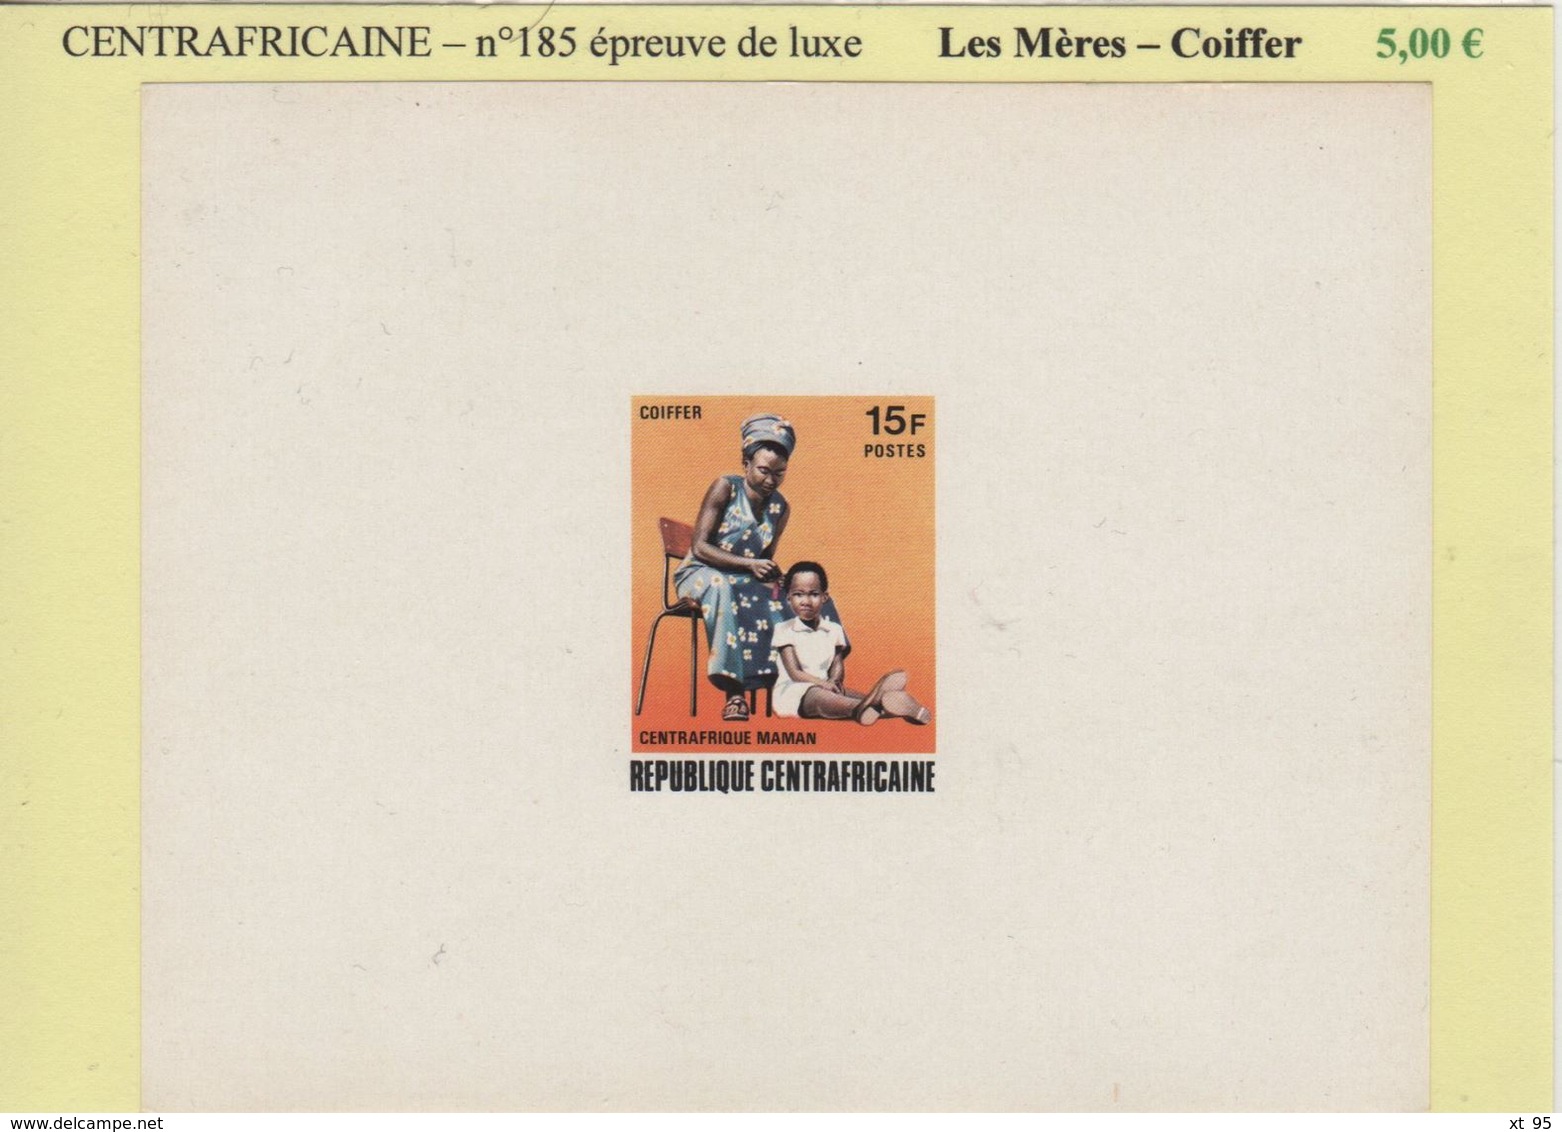 Centrafricaine - Epreuve De Luxe - N°185 - Les Meres - Coiffer - Central African Republic